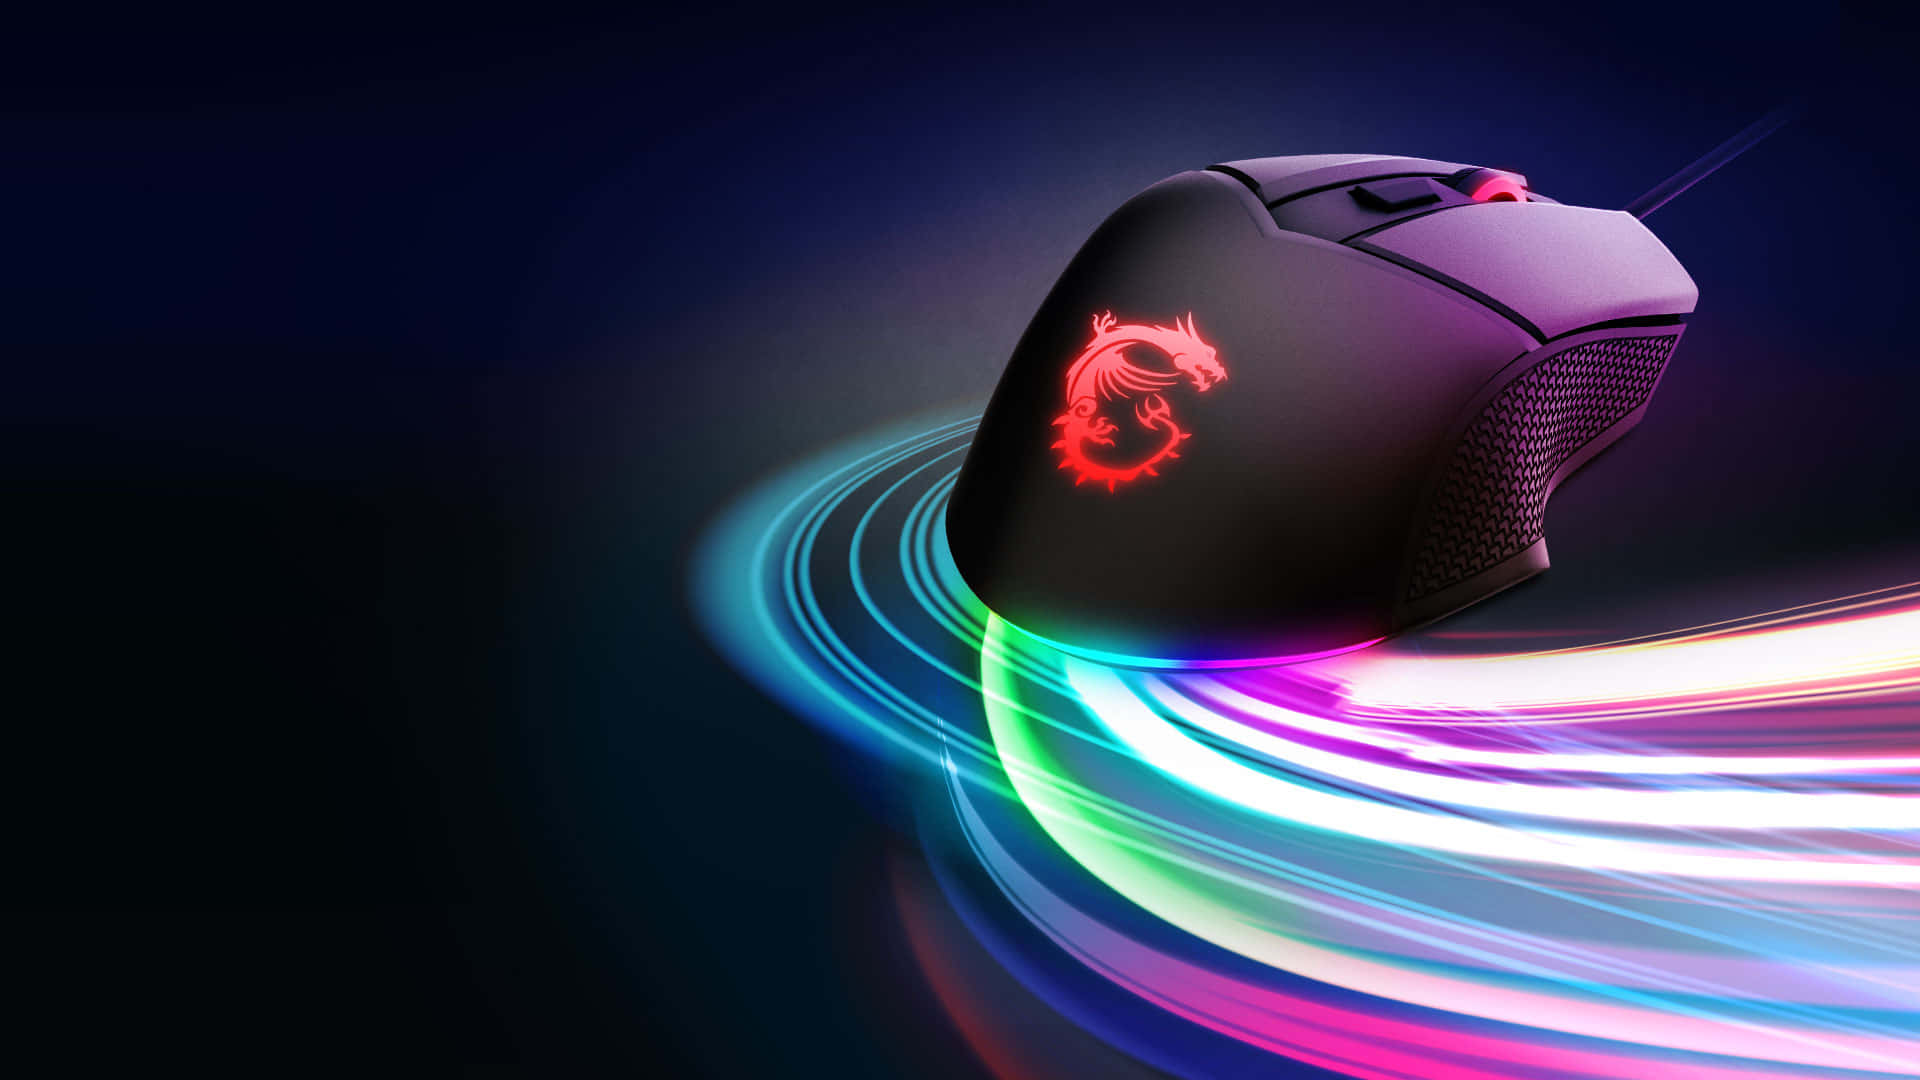 Sleek Gaming Mouse with RGB Lighting Wallpaper